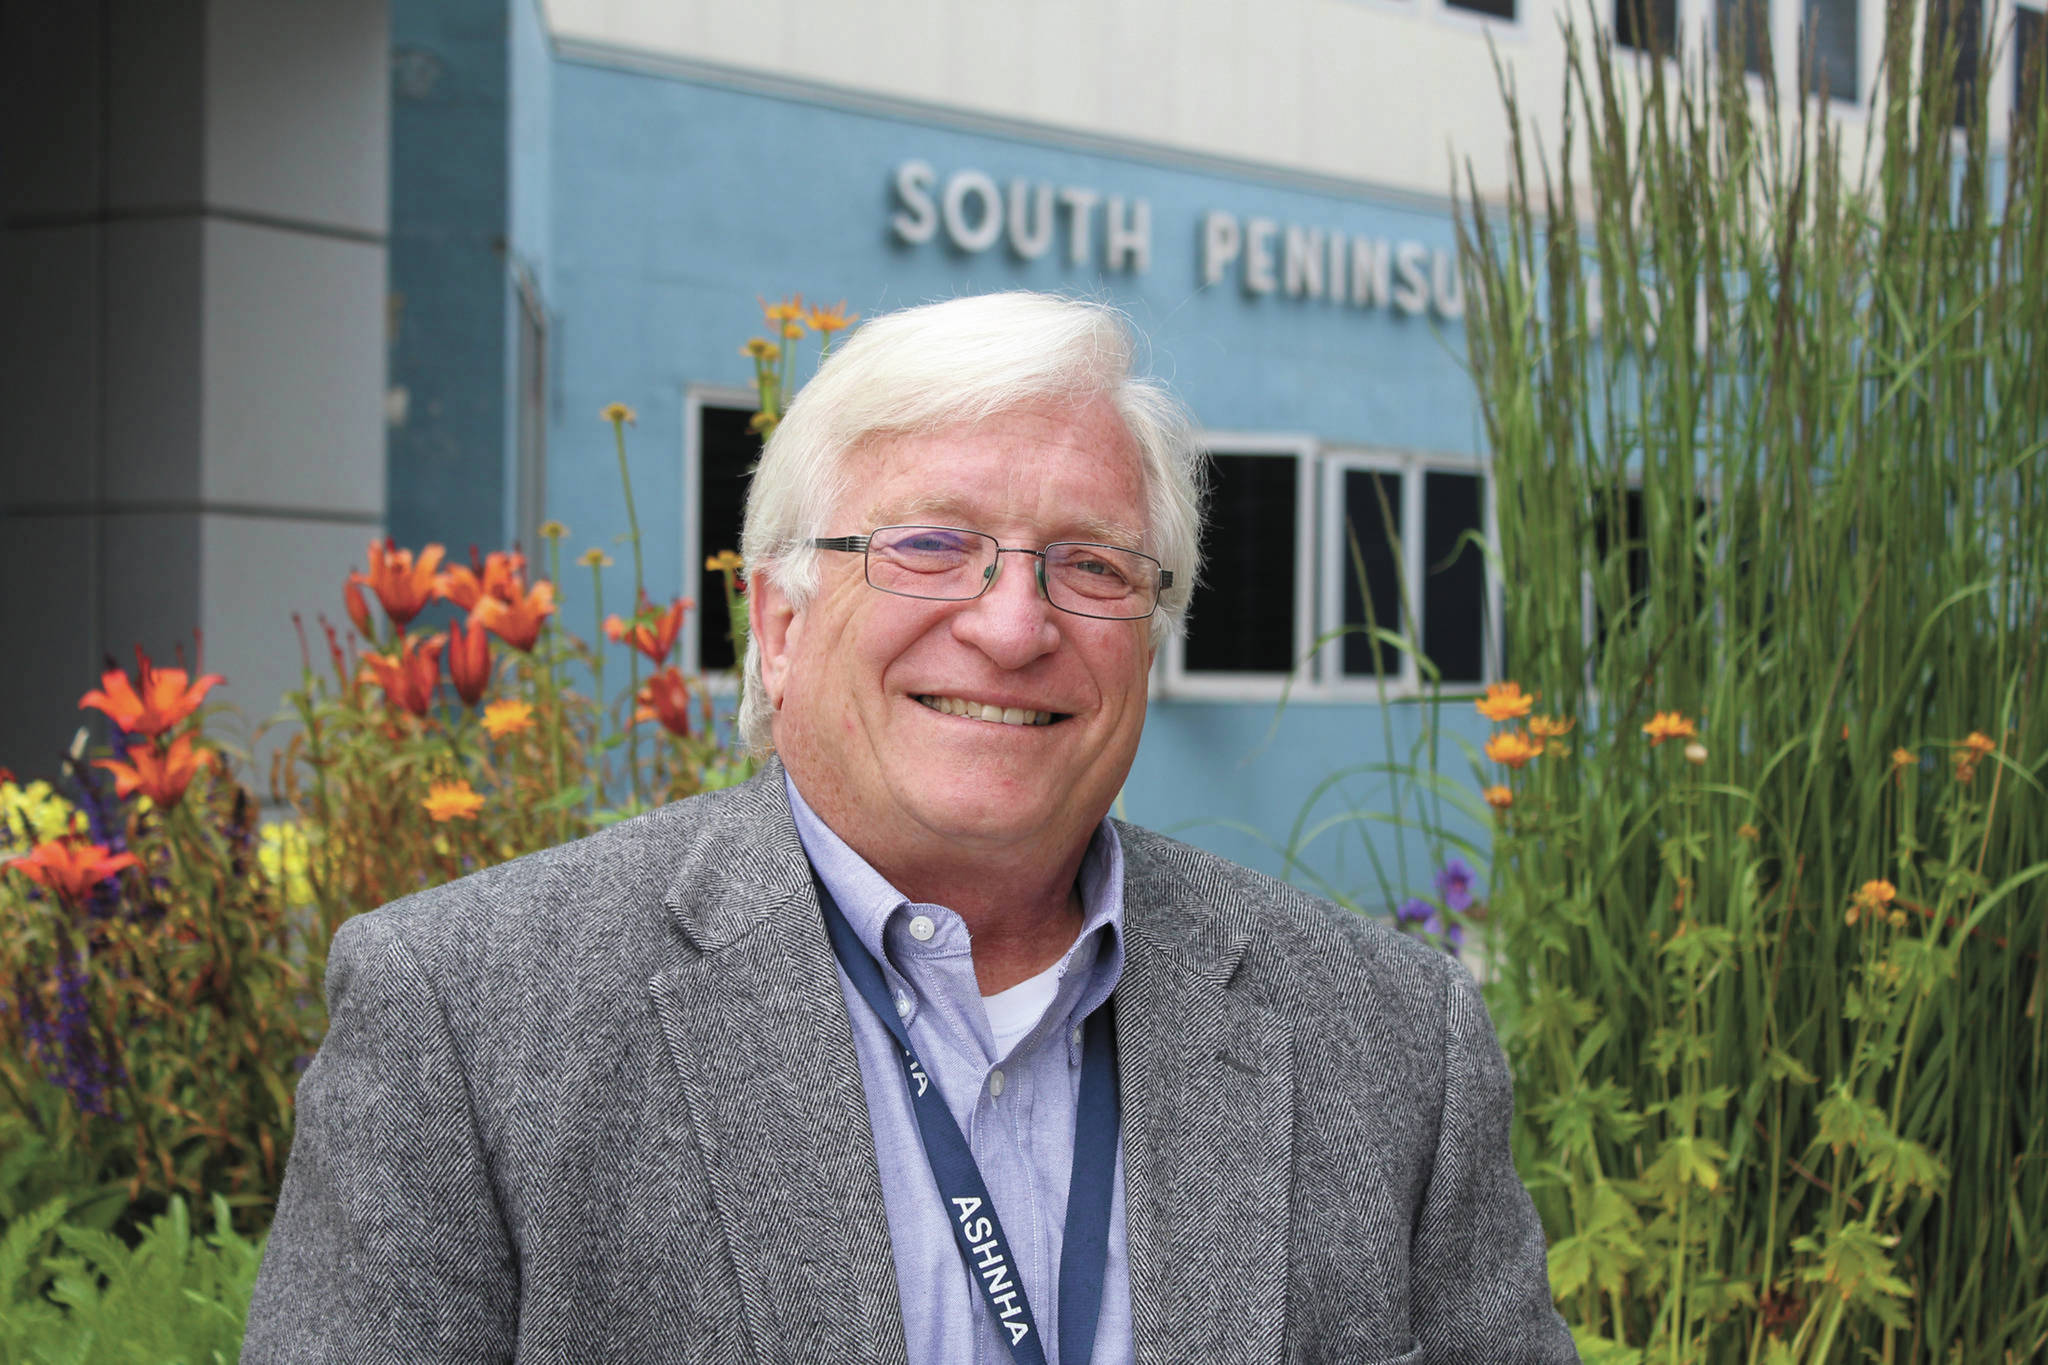 Bob Letson, former CEO of South Peninsula Hospital. (Homer News file photo)